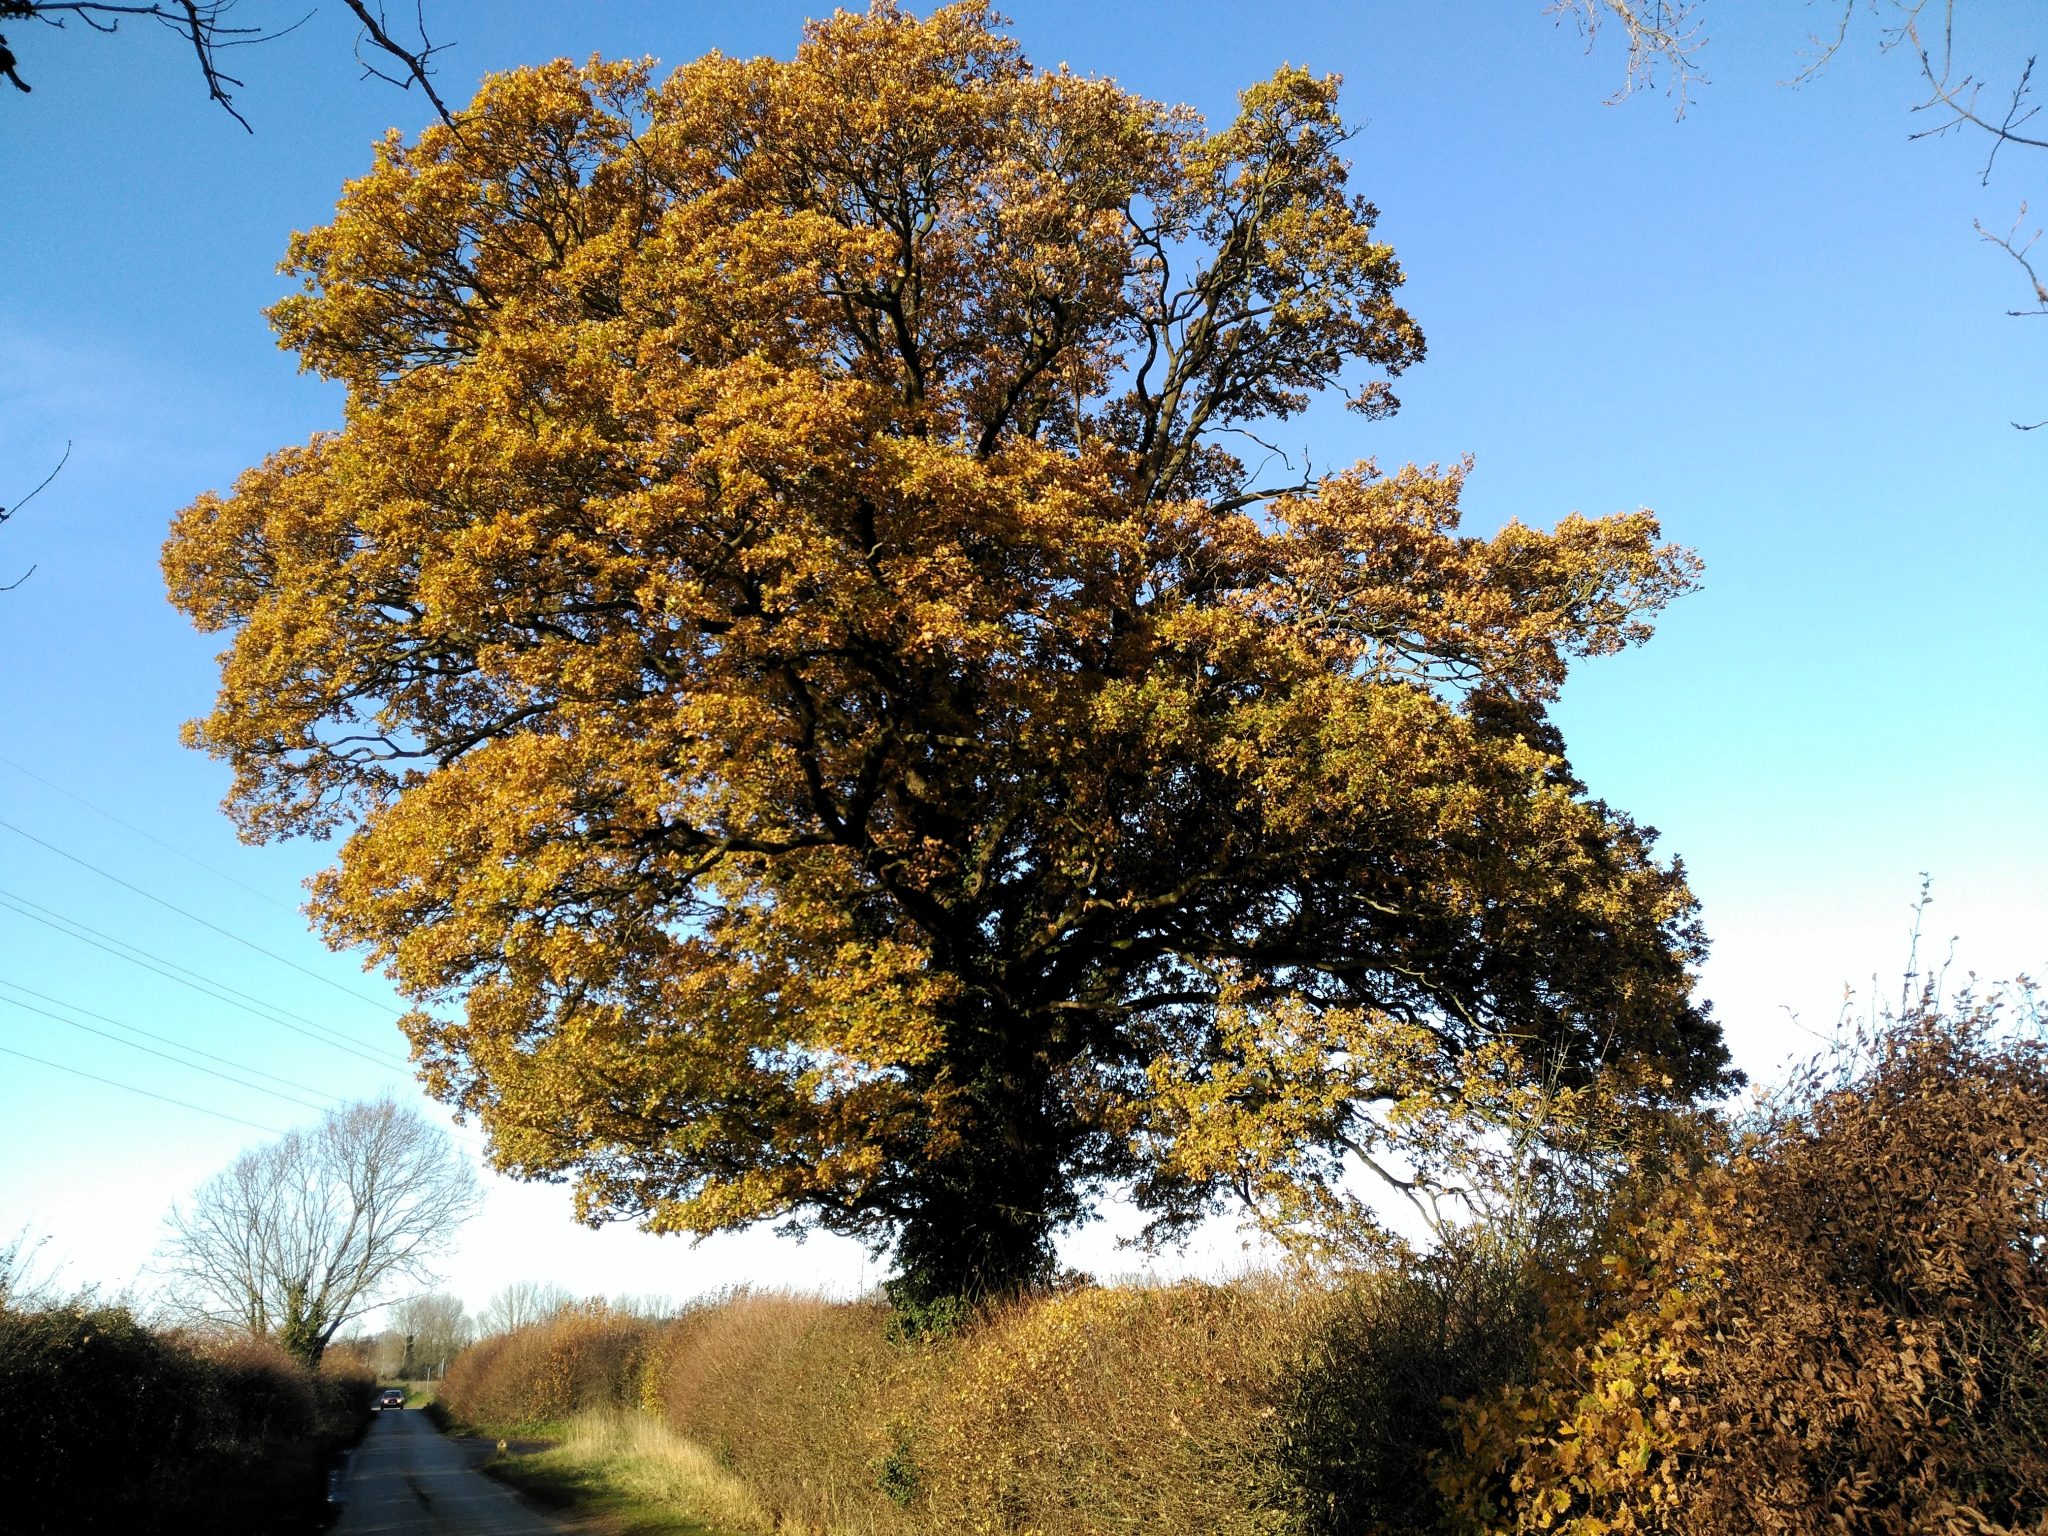 Big Tree in autumn colours